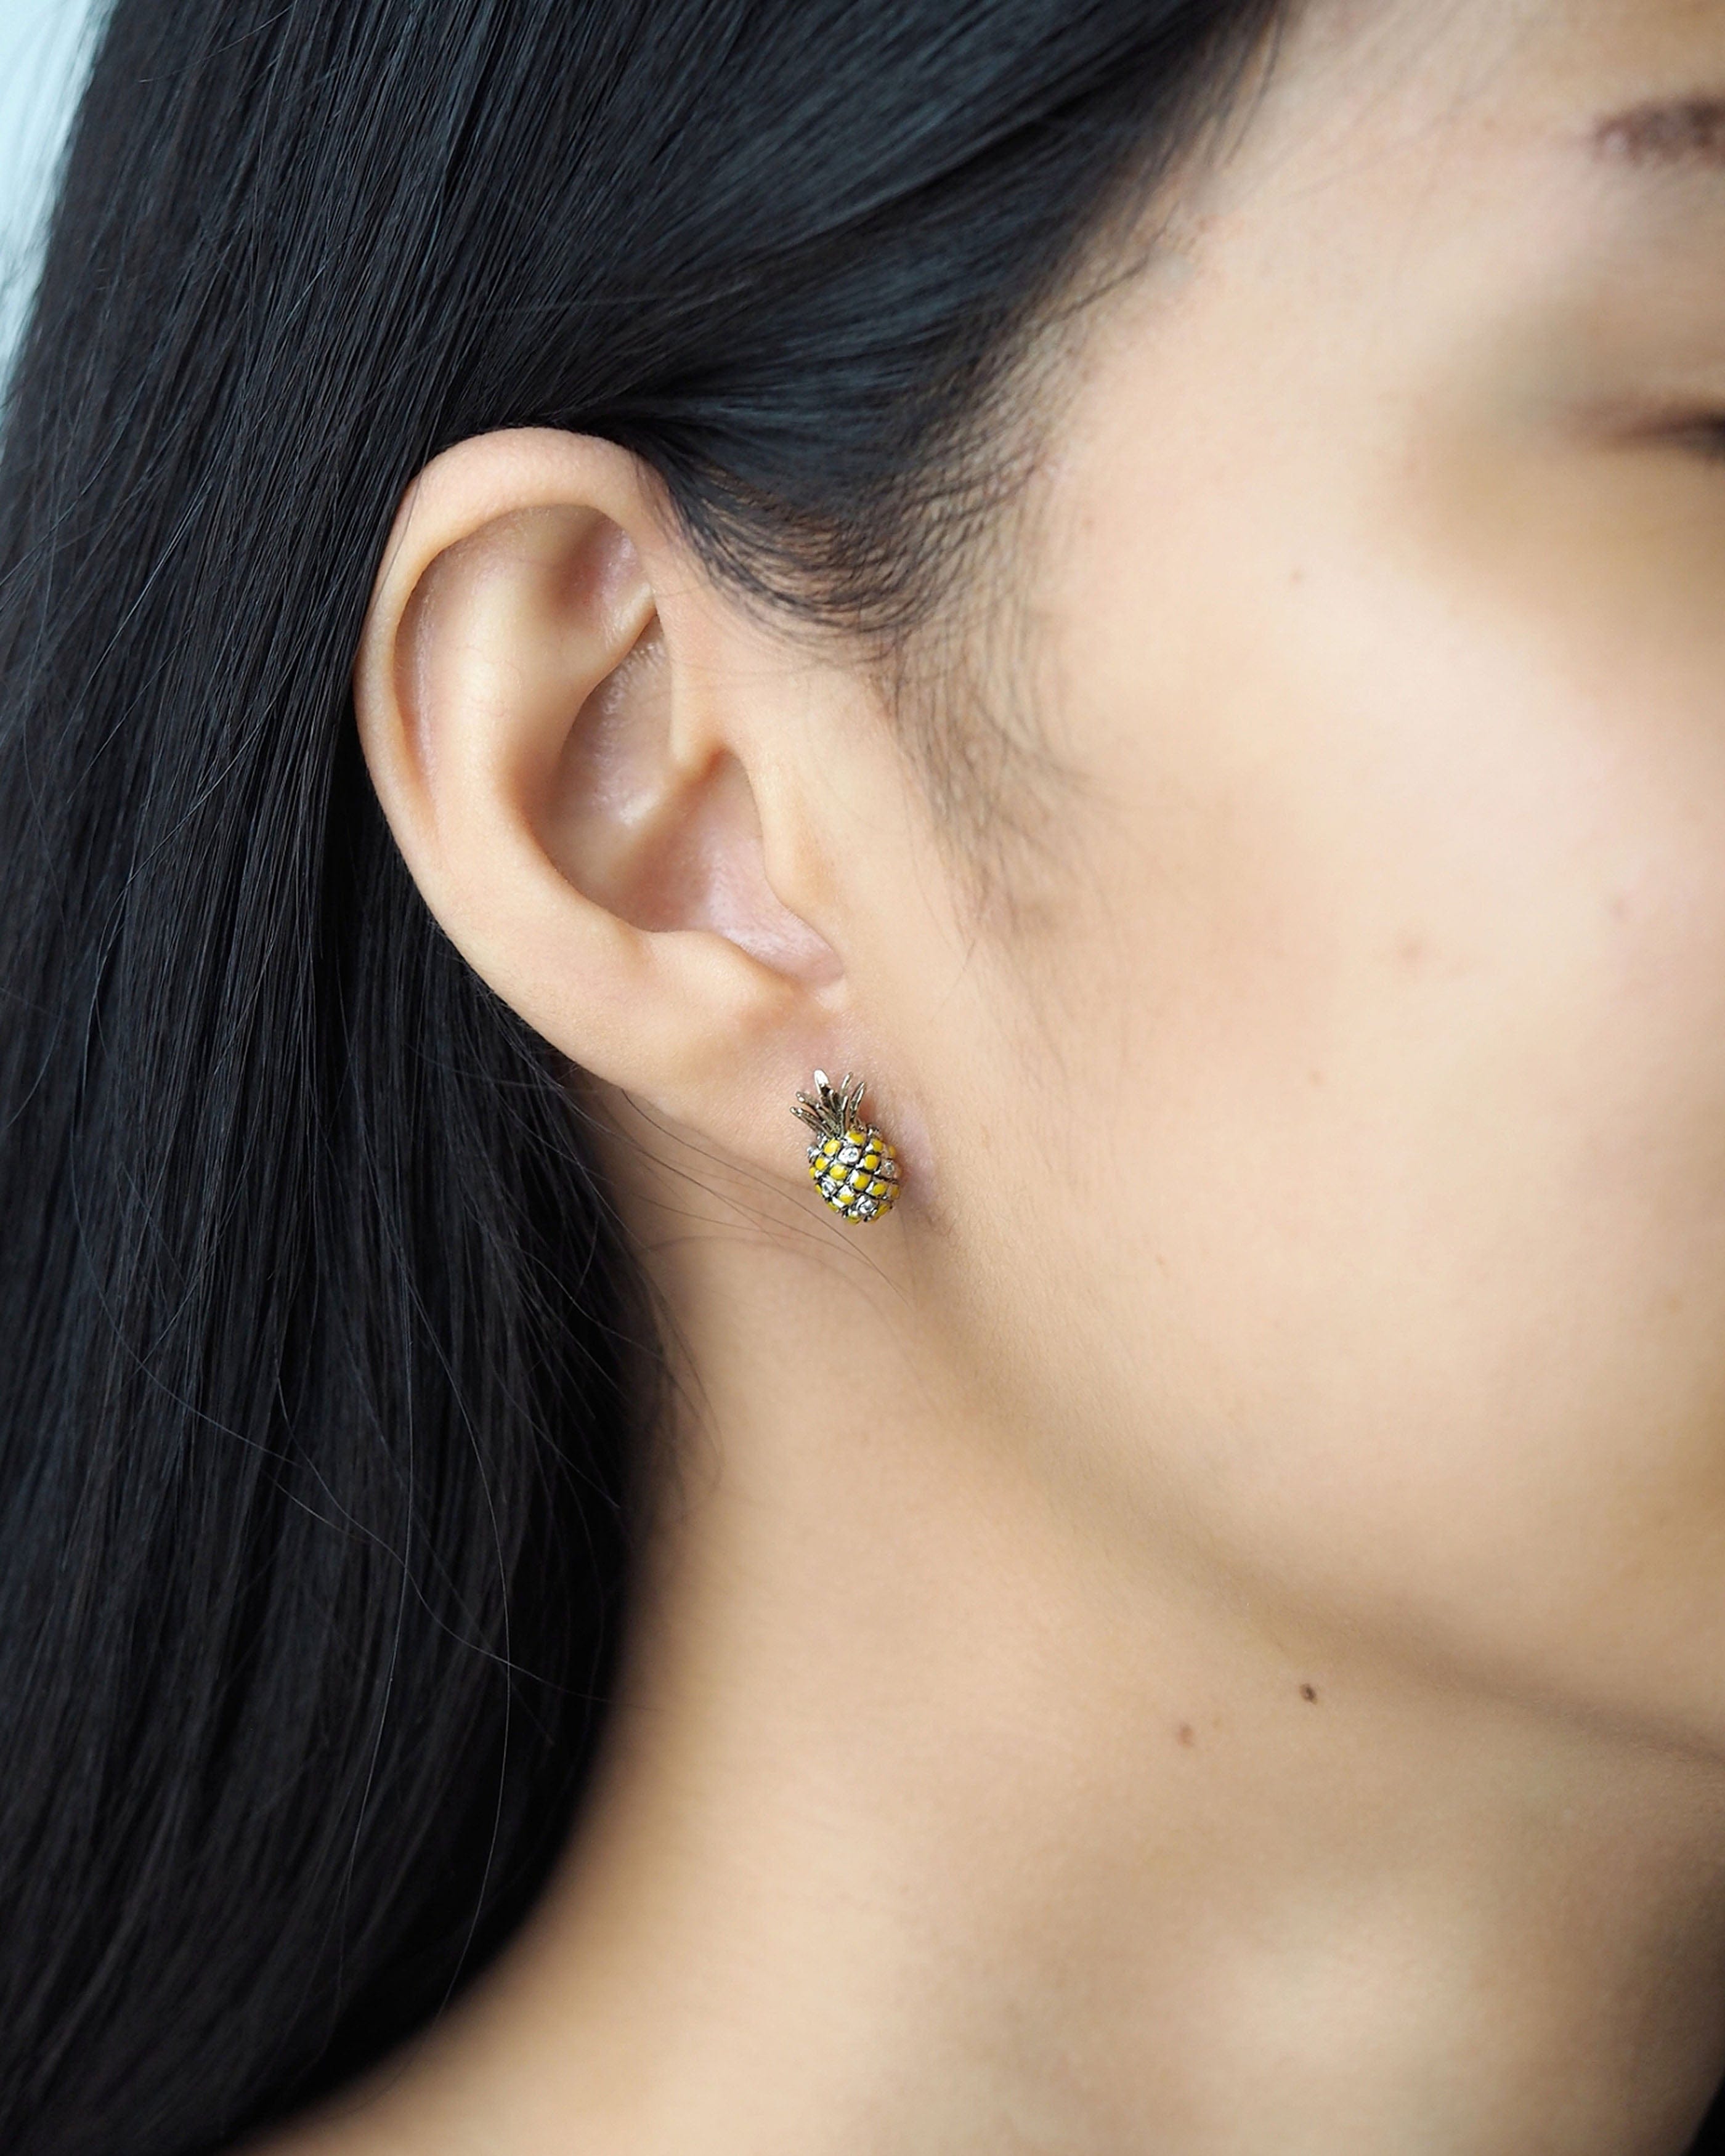 TAI JEWELRY Earrings Pineapple Studs With Enamel